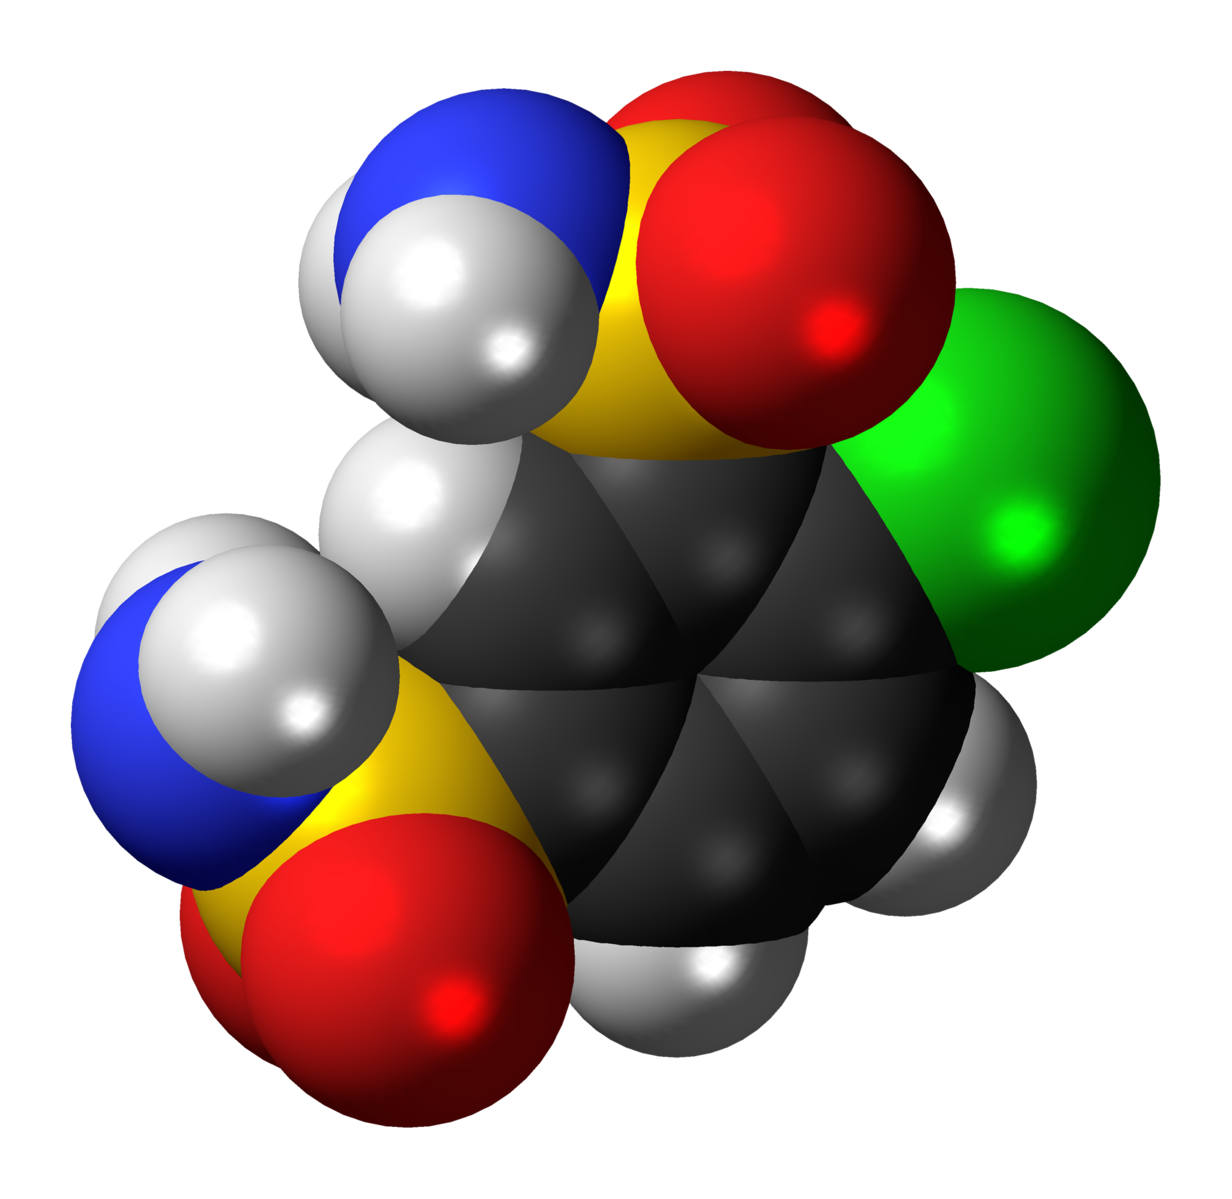 Ball-and-stick model of clofenamide